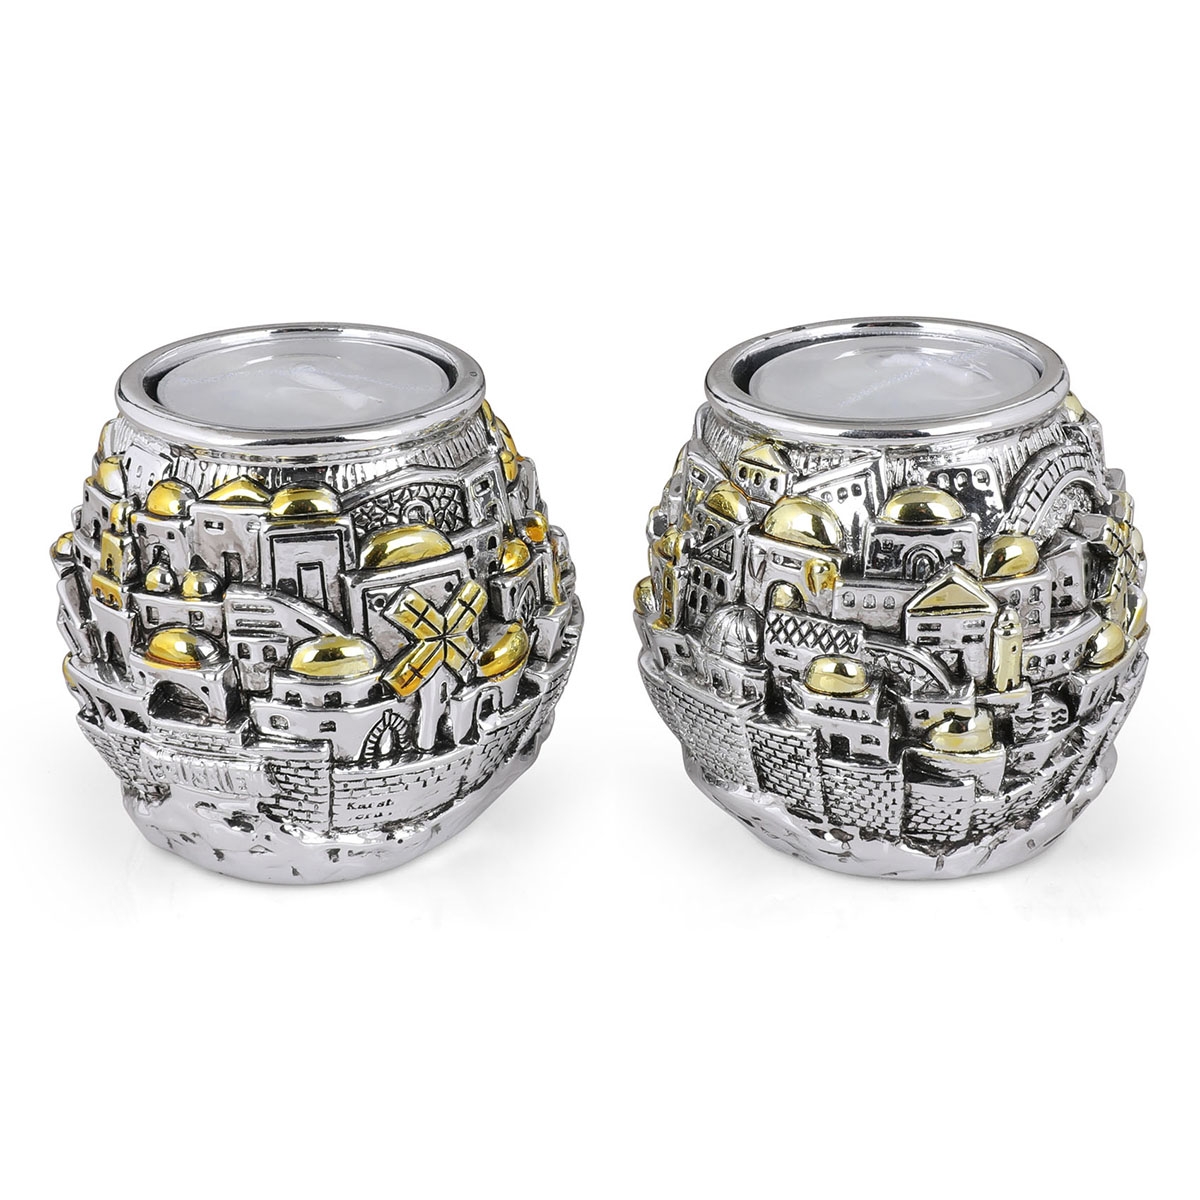 Silver Plated Jerusalem Ball Candlesticks - 1